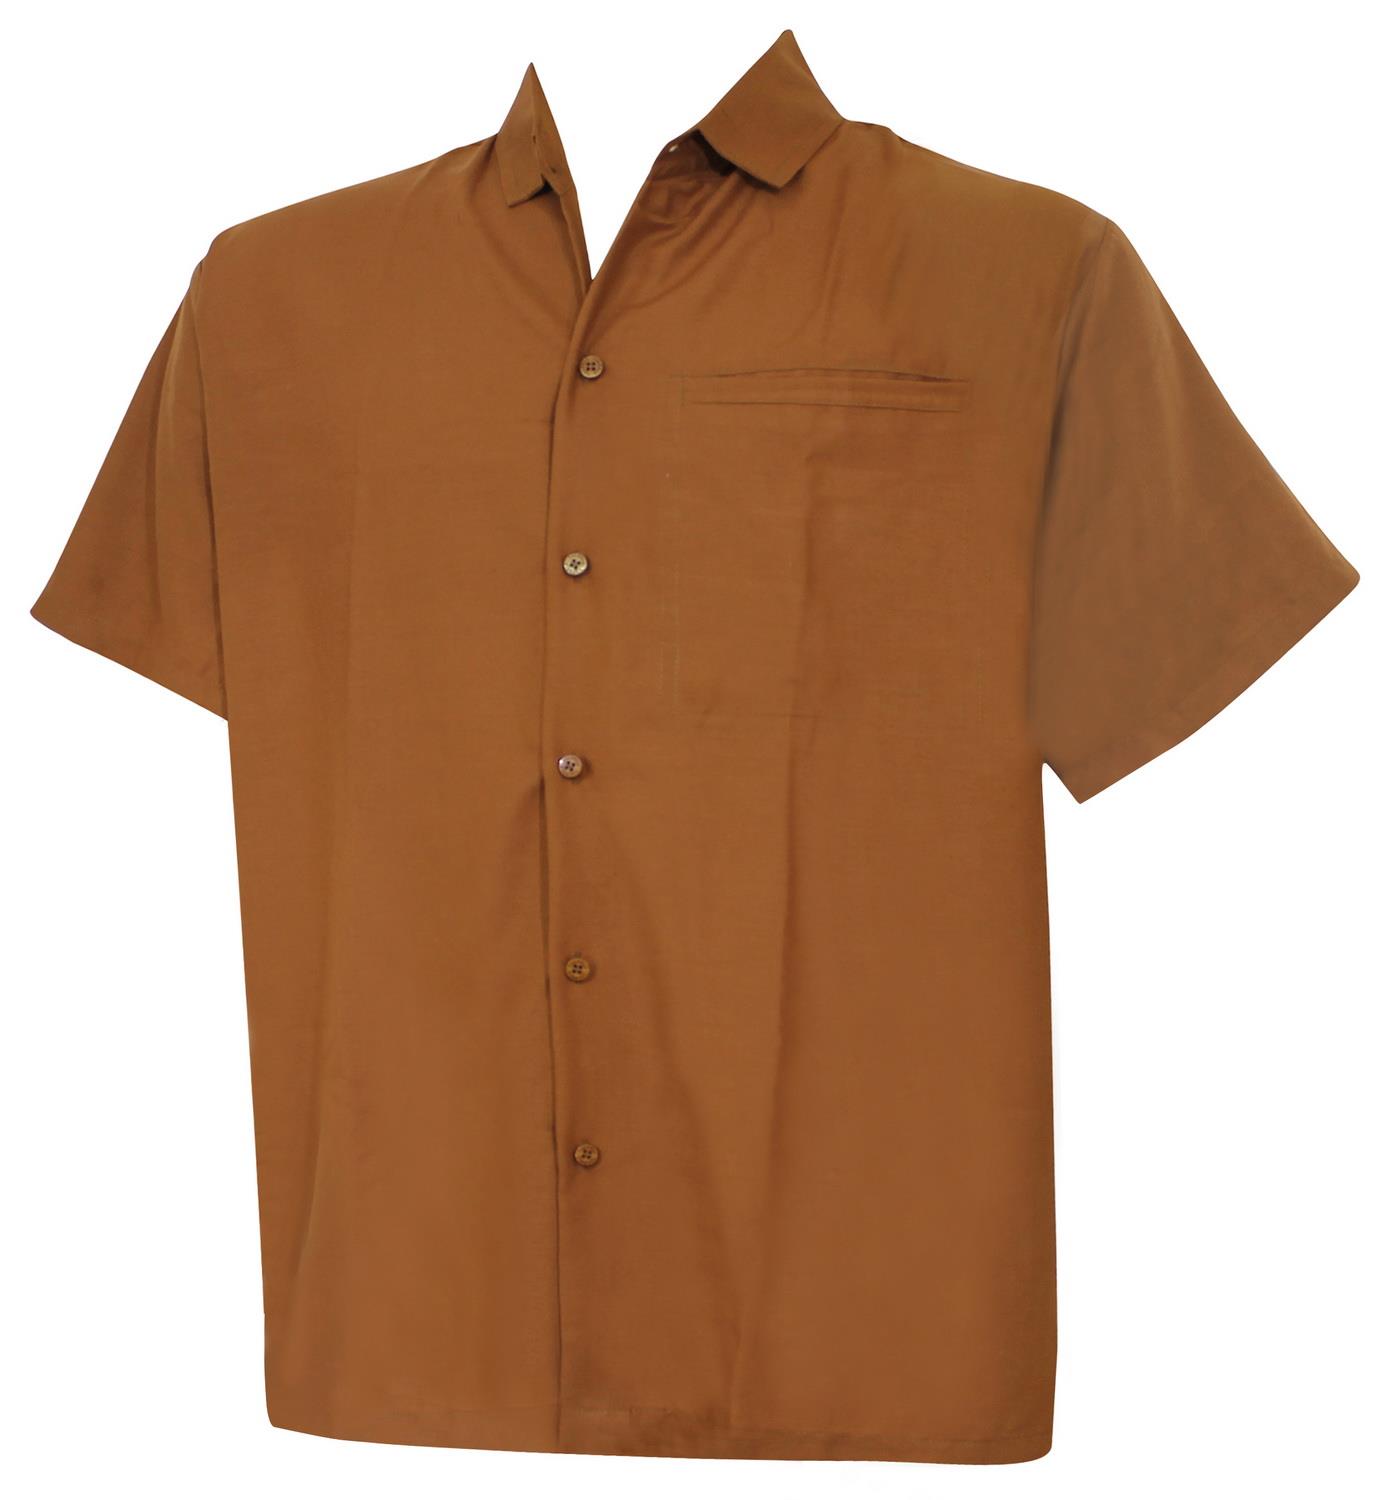 La Leela Solid Casualwear Plain RAYON Brown Beach Camp Hawaiian Shirt For Men S 